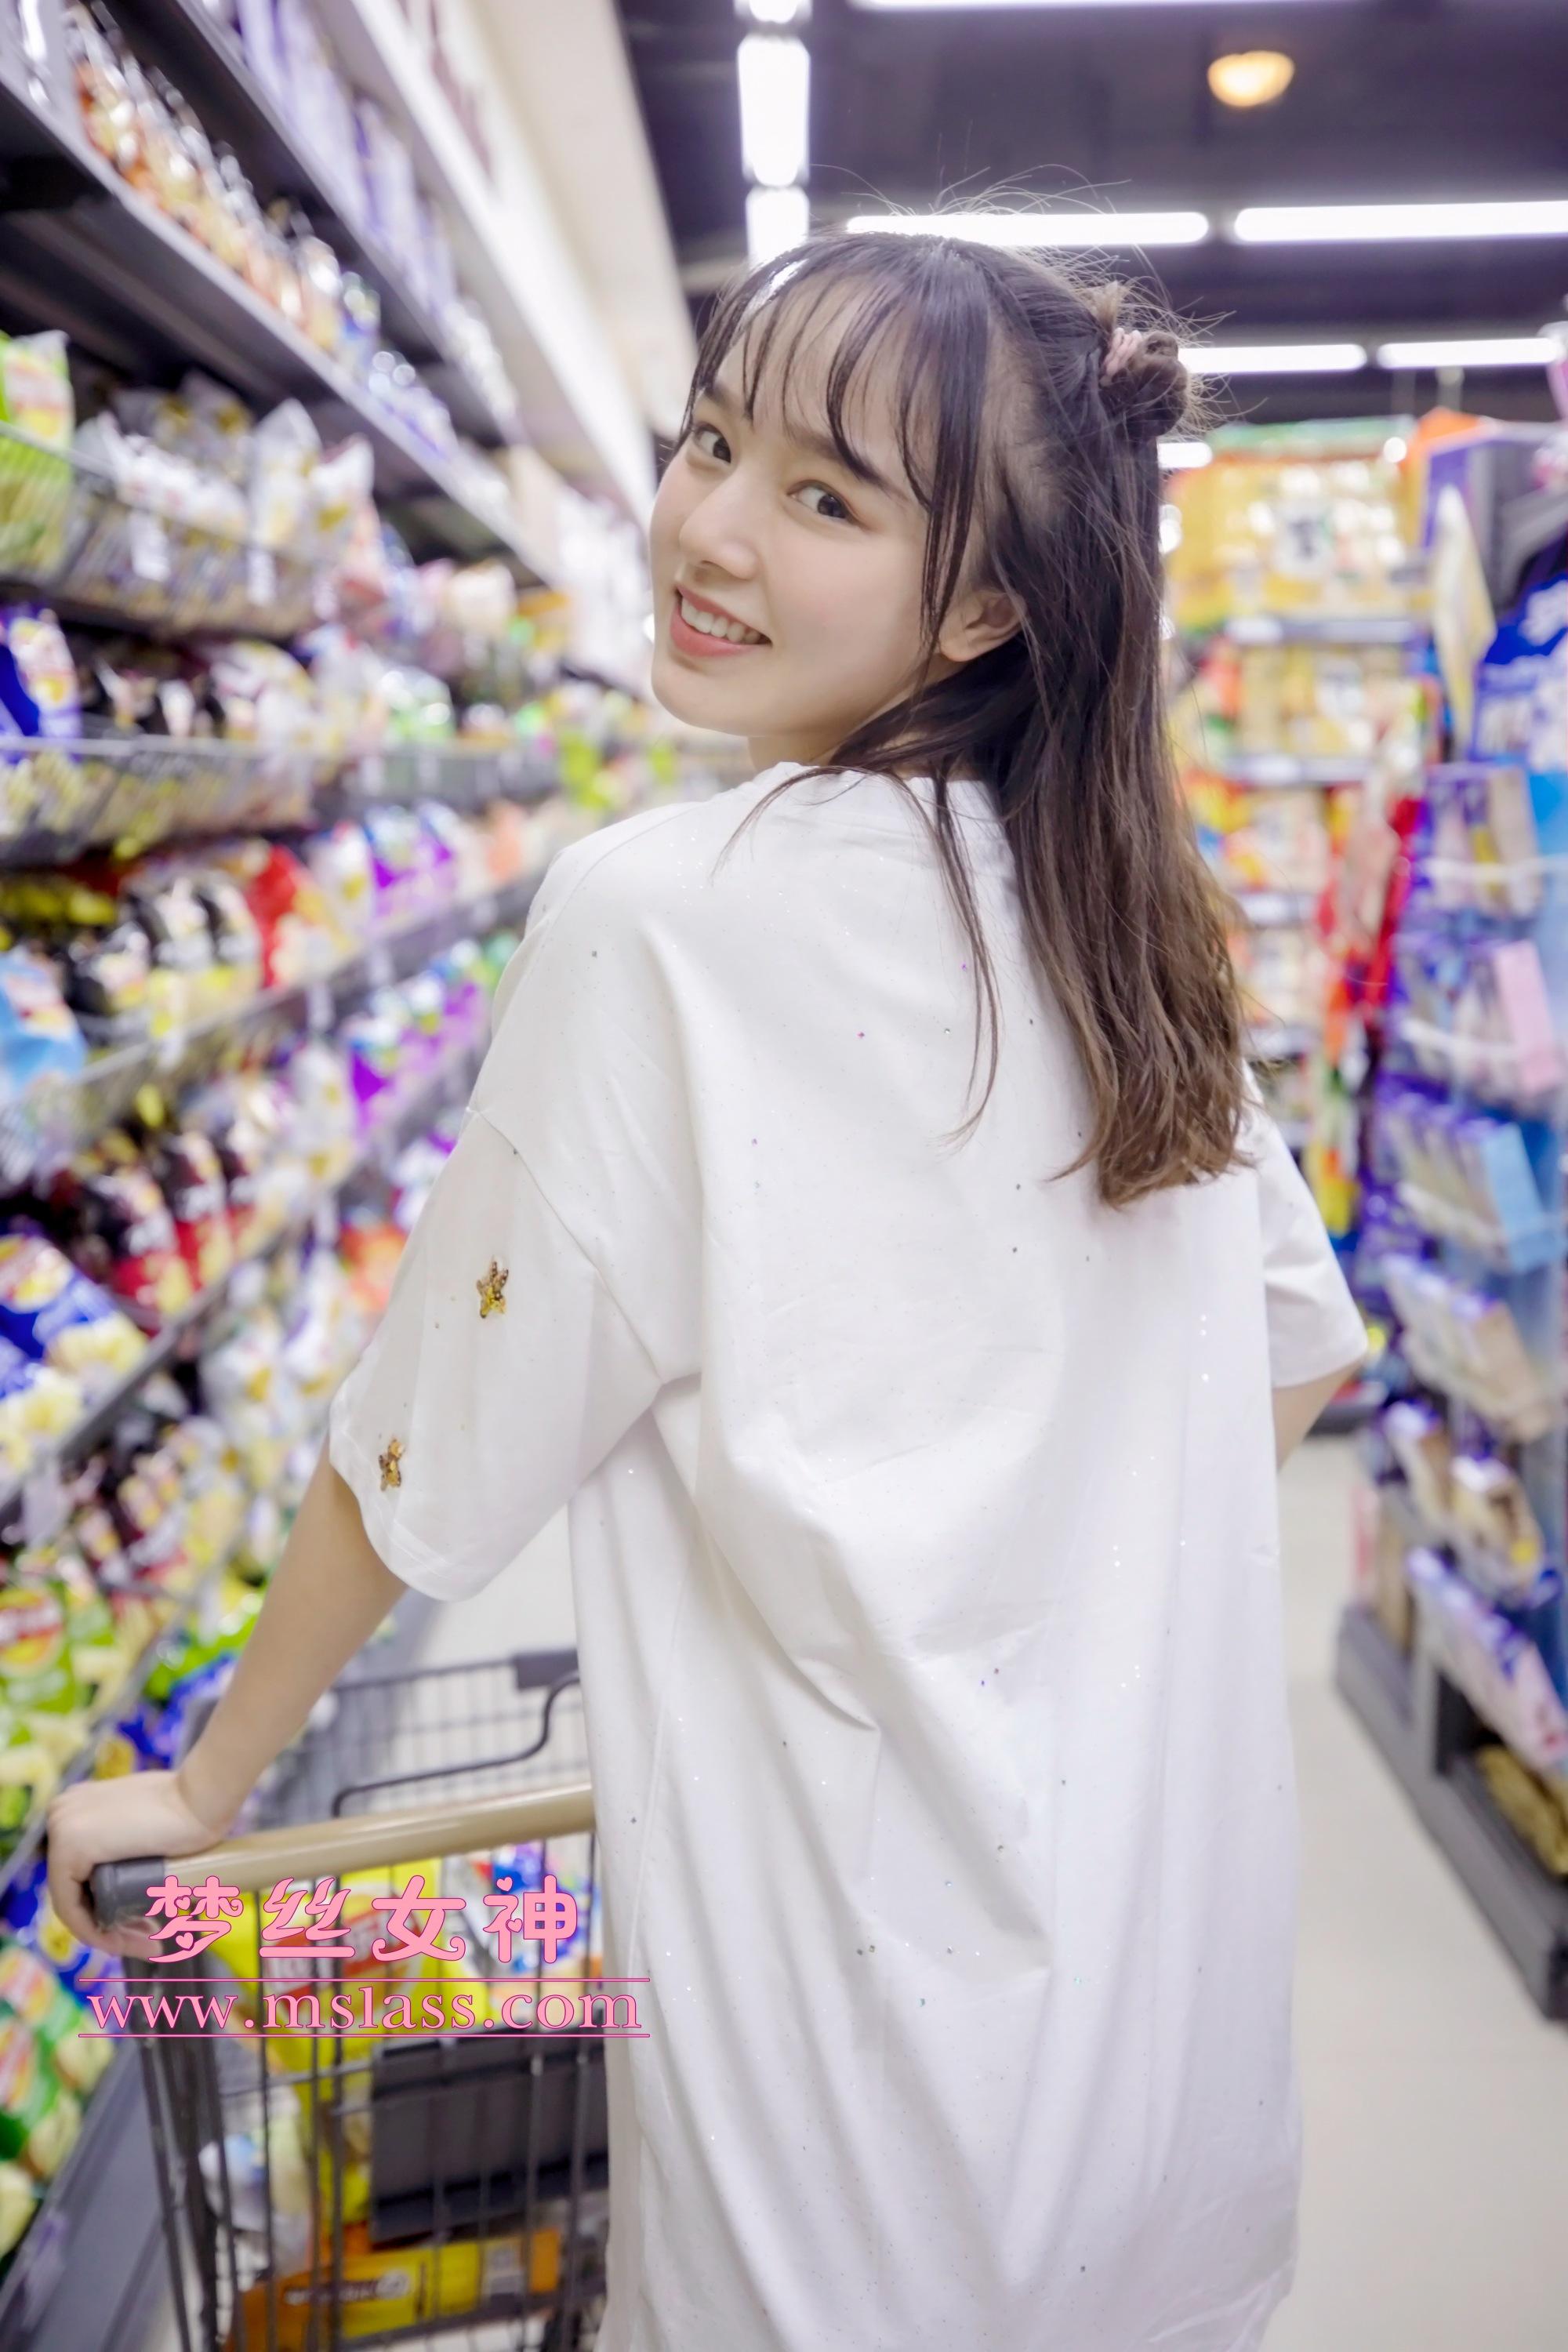 MSLASS梦丝女神 2019.05.02 超市的吃货少女 玥玥 - 16.jpg